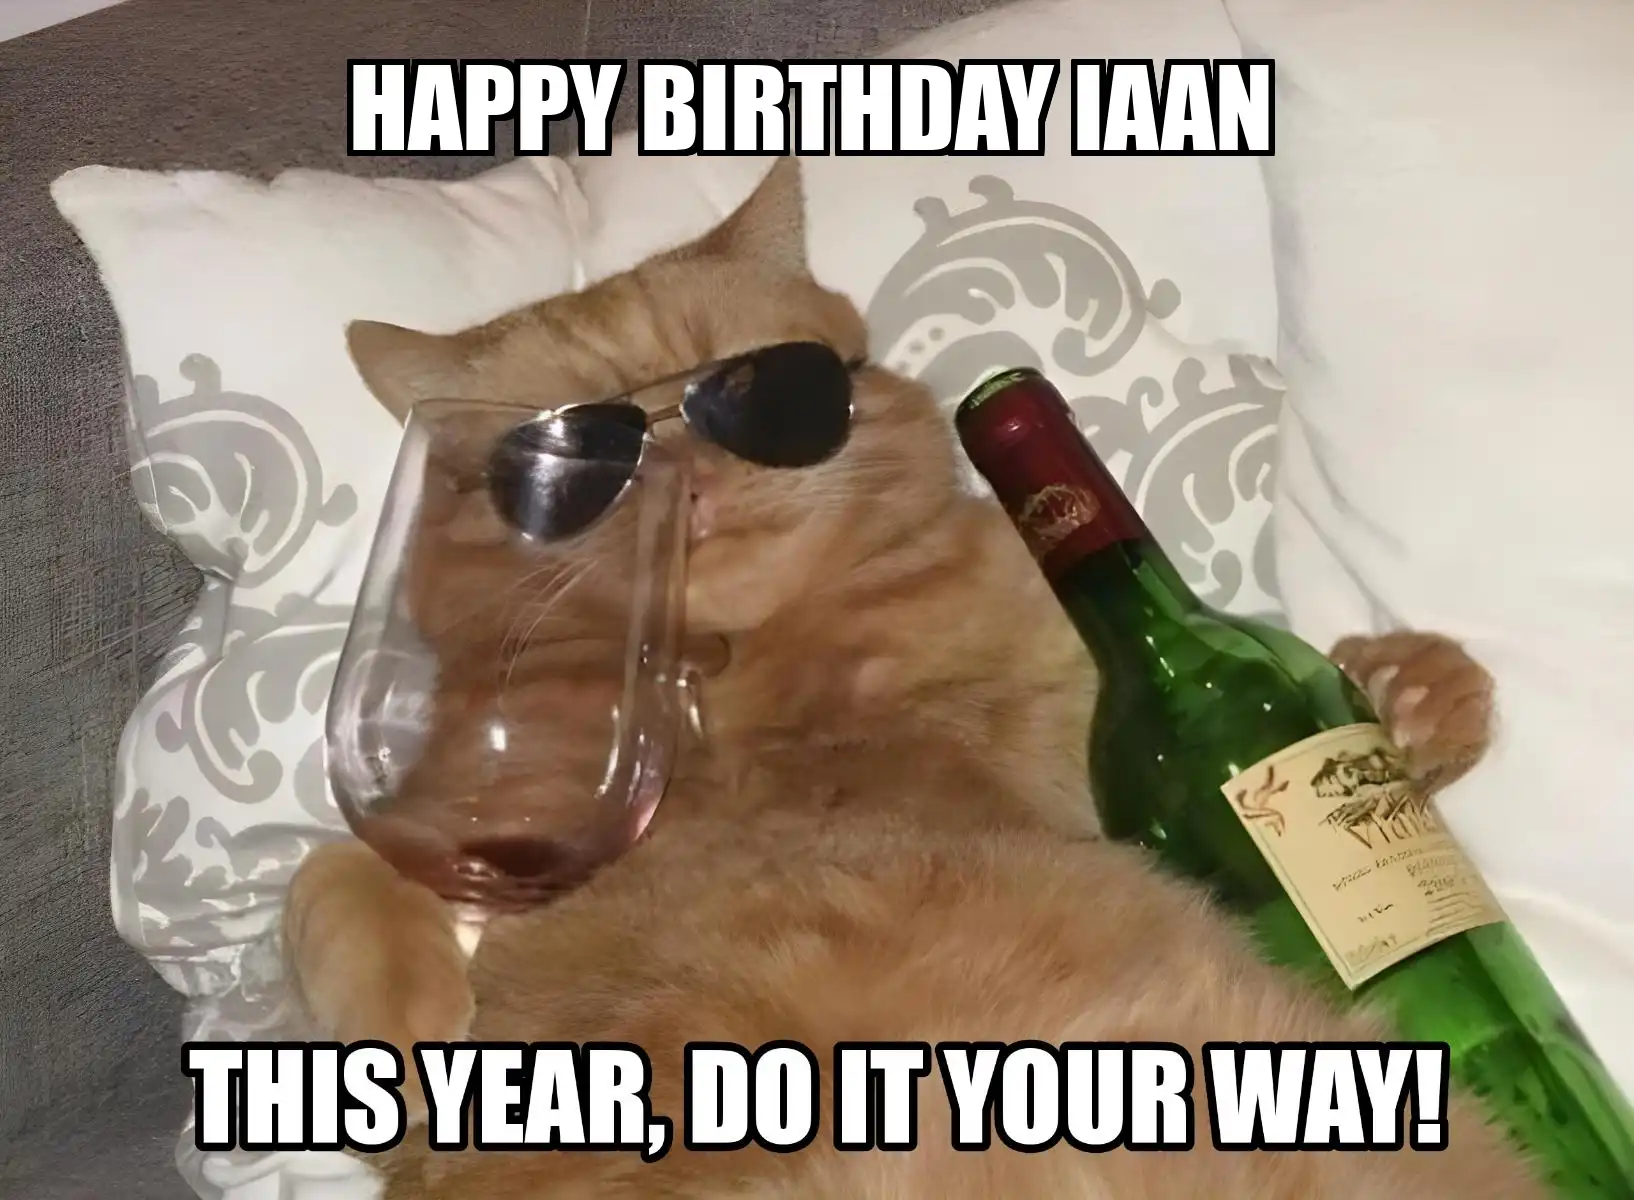 Happy Birthday Iaan This Year Do It Your Way Meme